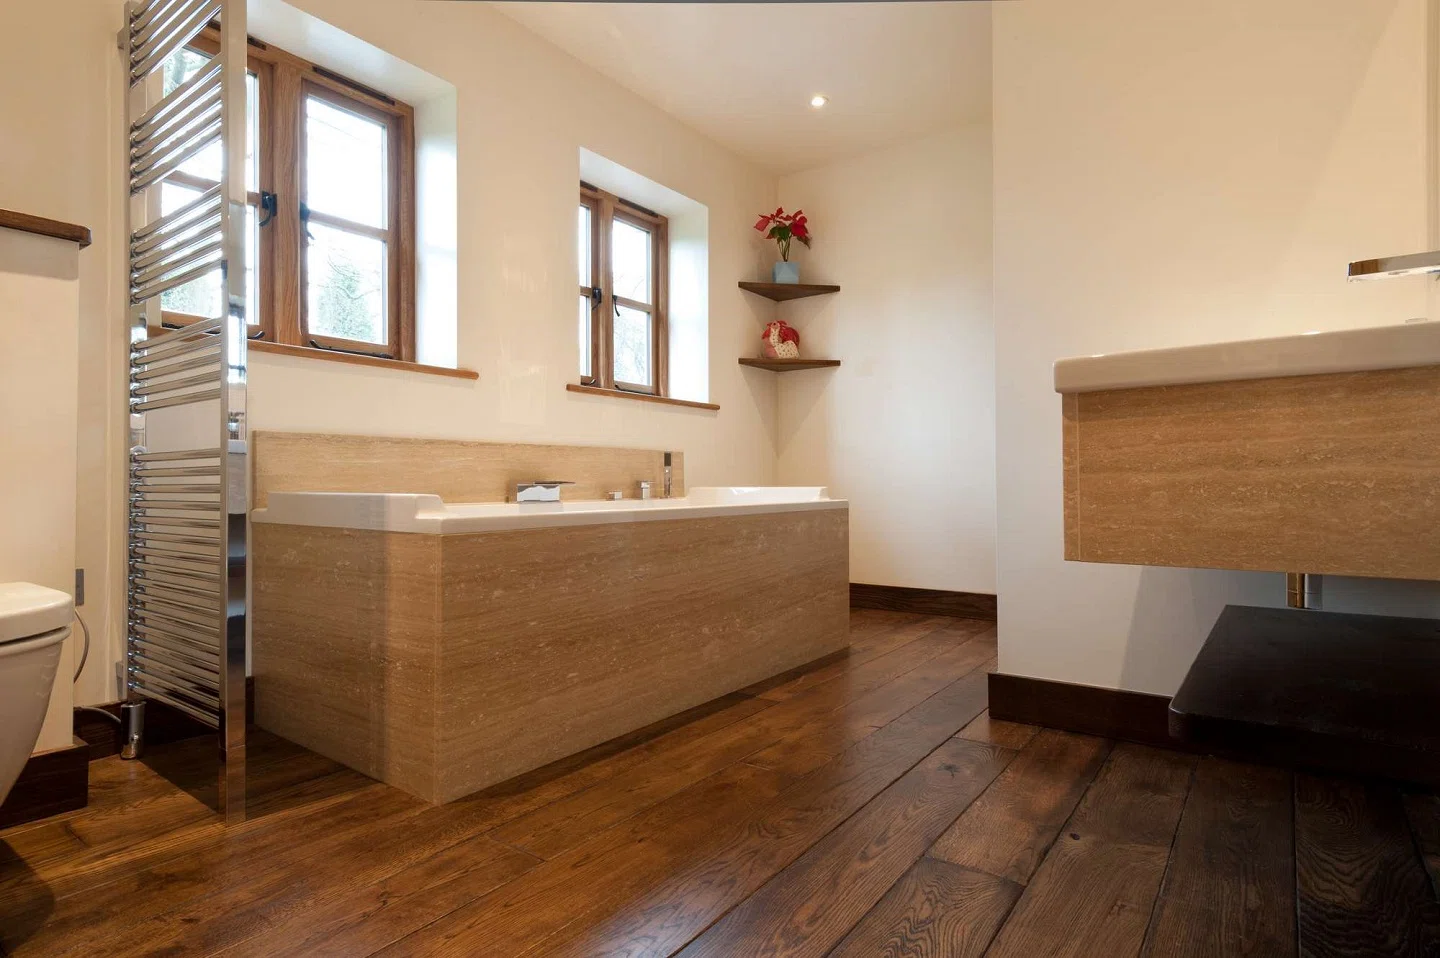 Bathroom Flooring: Robustness and Water Resistance